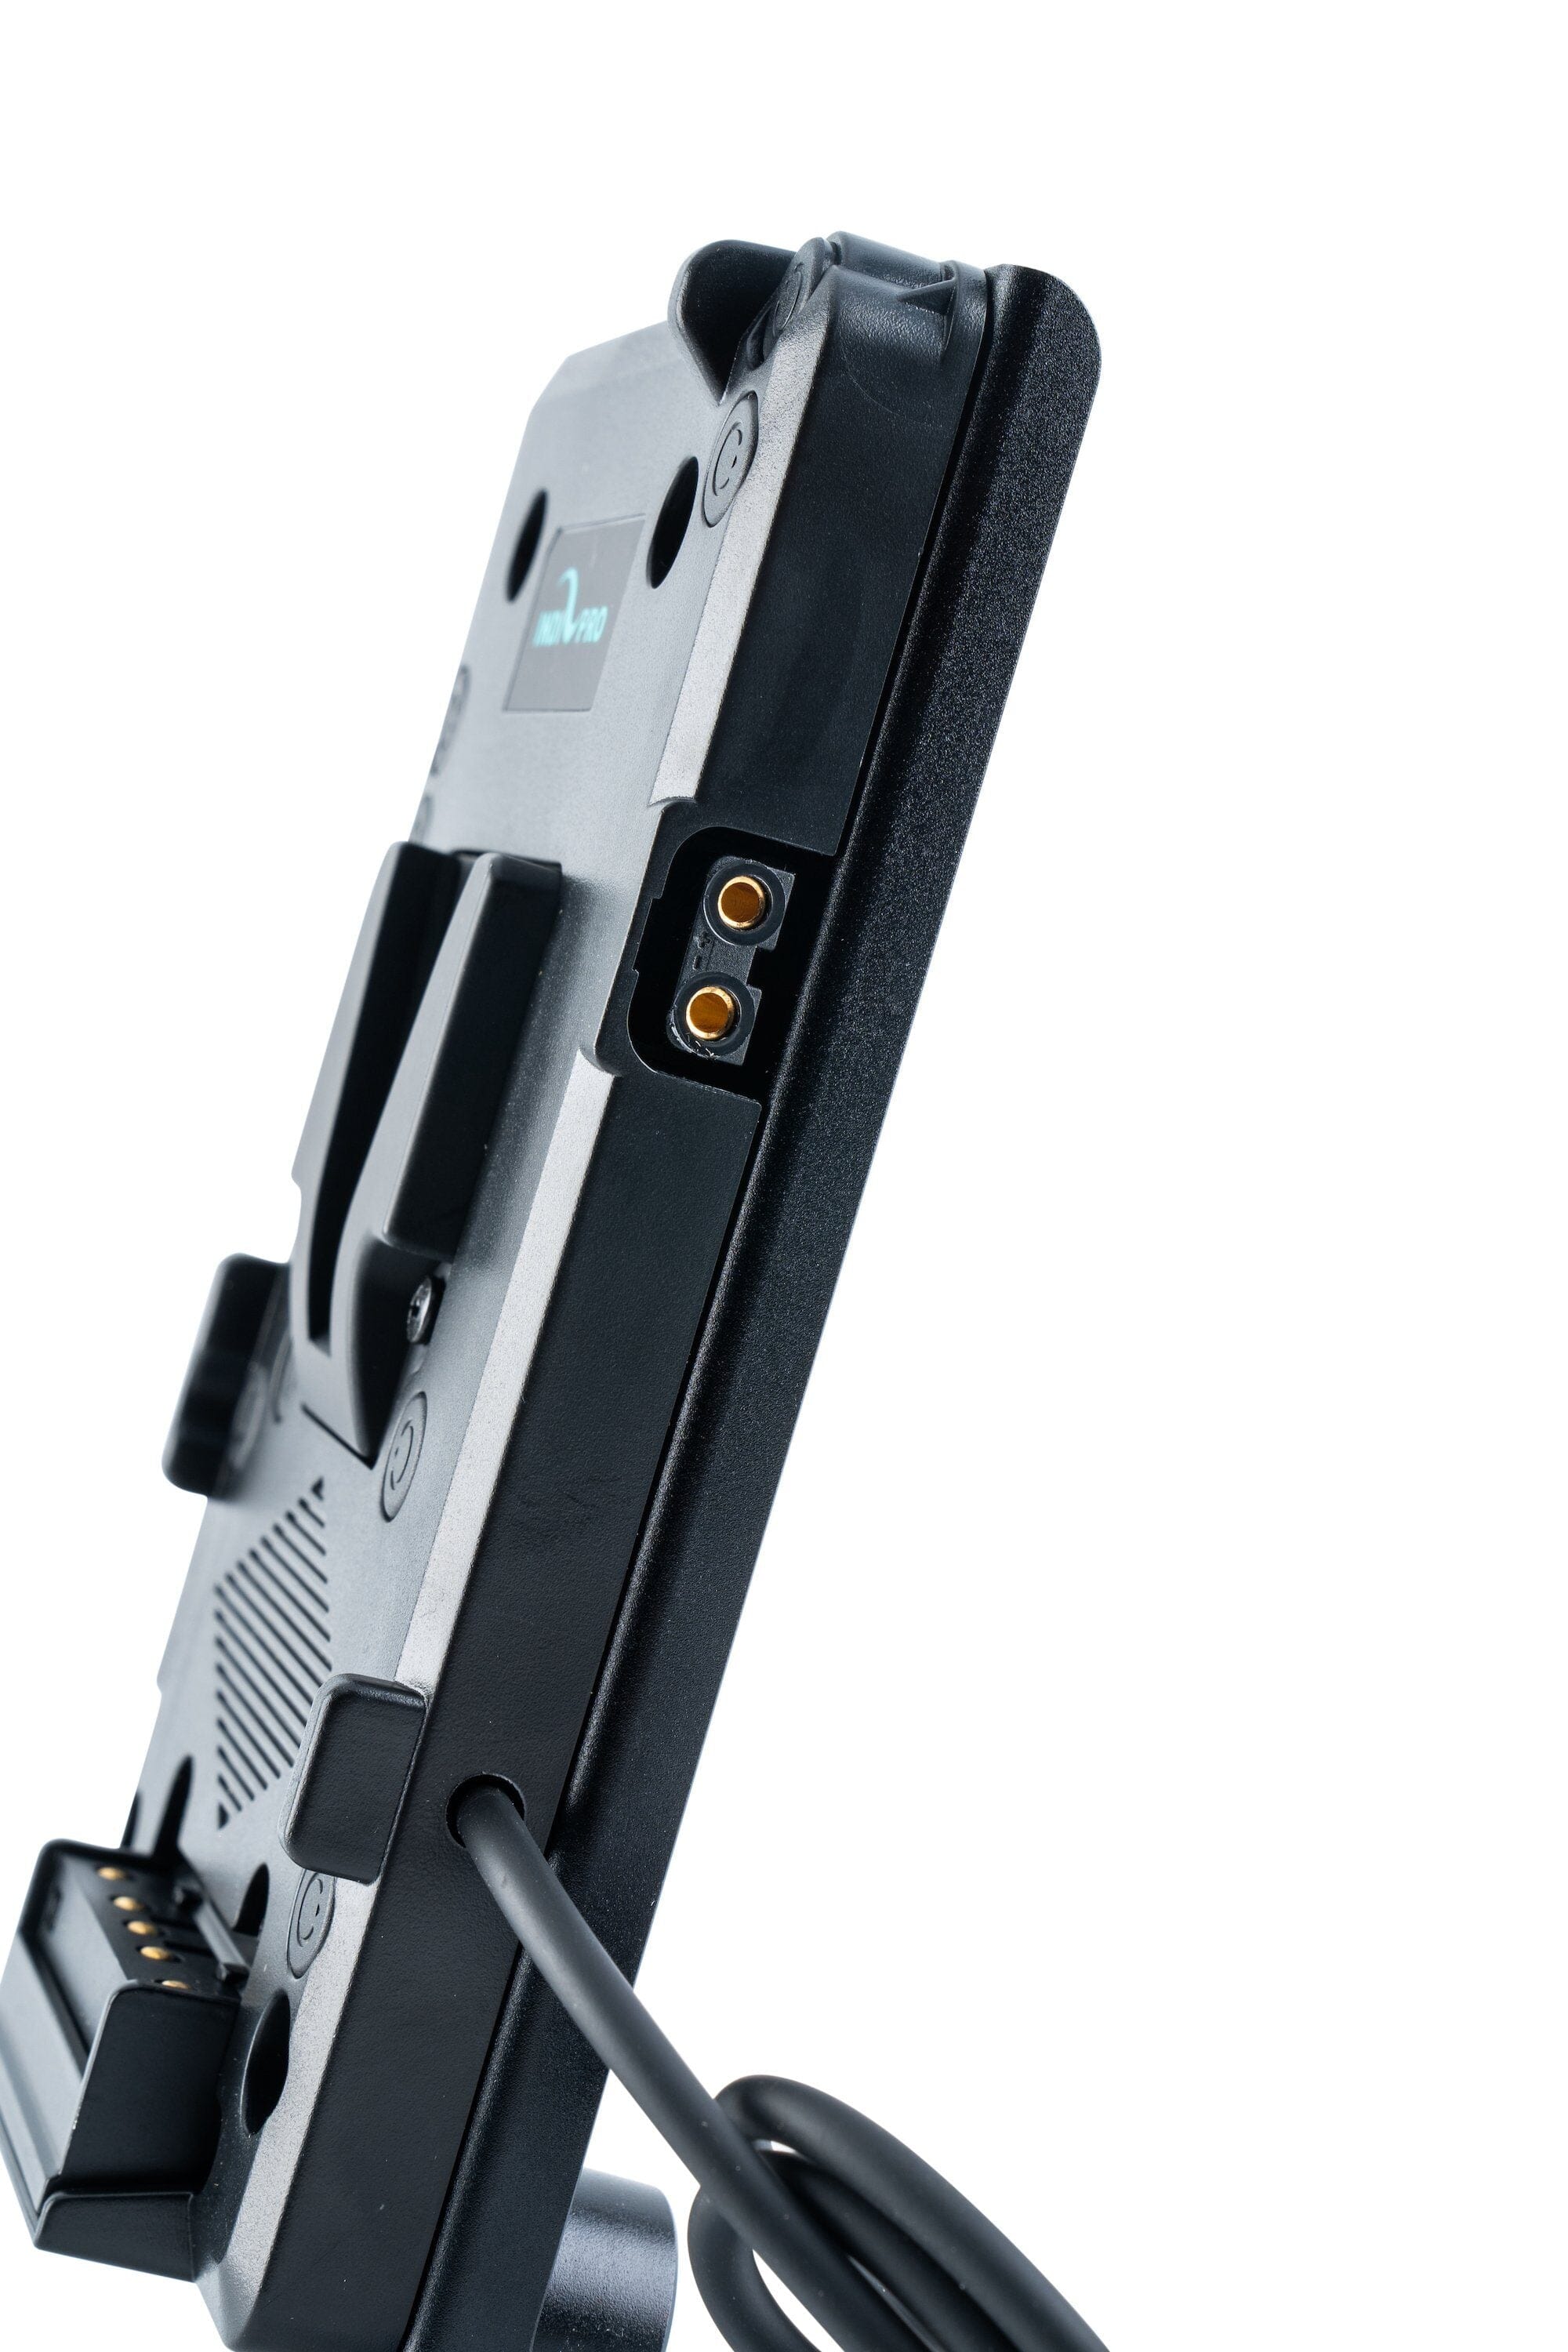 Ultra Mini V-Mount Adapter Plate w/ 15mm Rod Clamp for BMPCC 4/6K Pocket 4K/6K Indipro 